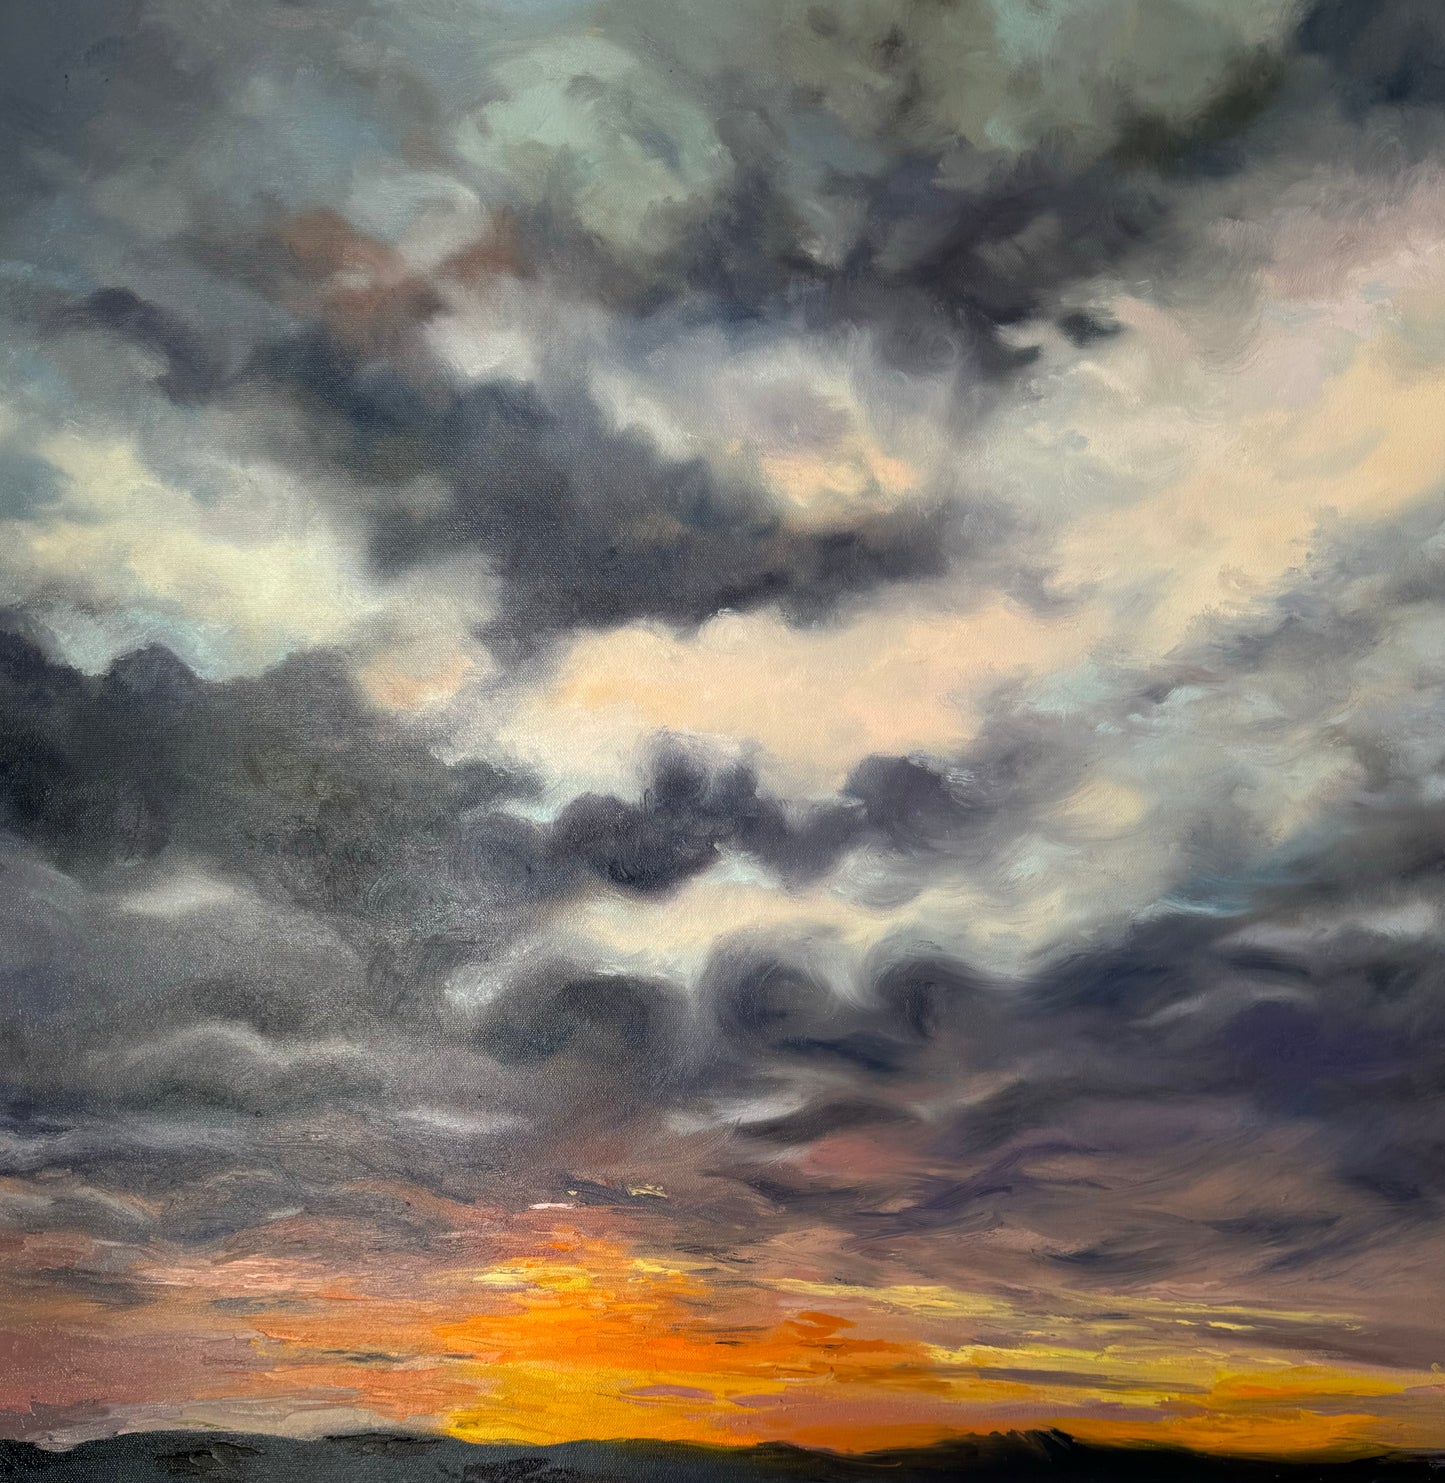 Sunrise Brings Calm - Beautiful Sunrise Painting - Lelant, St Ives - lorrainefield